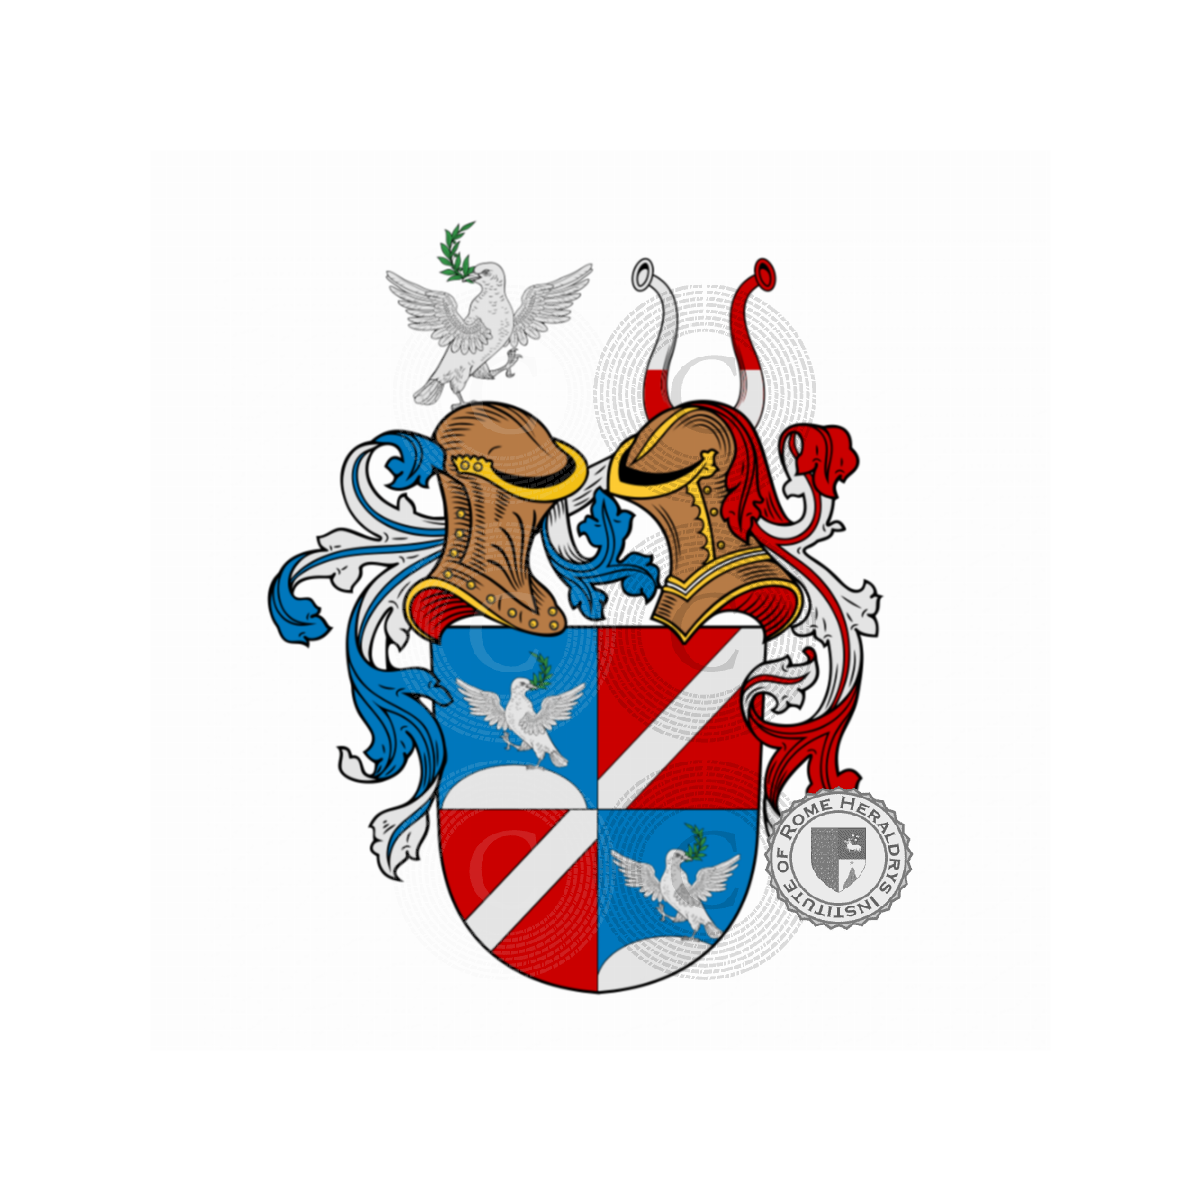 Wappen der FamilieSeyfried, Edle von Seyfried,Seyfriedsdorf